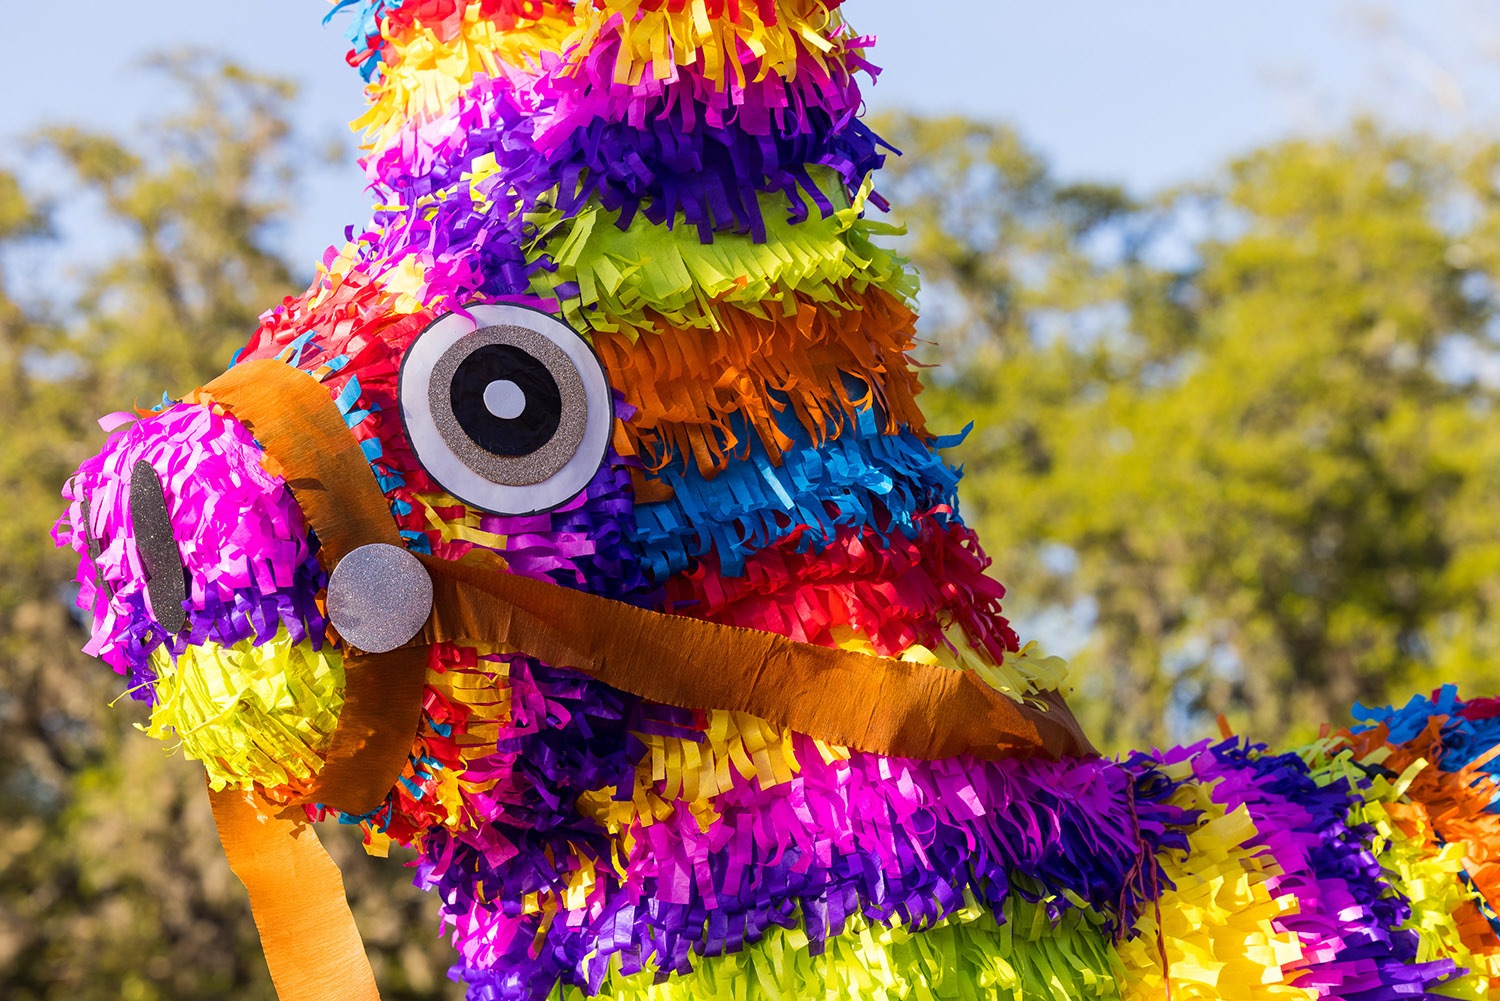 Donkey piñata at Fiesta Fiesta at Hemisfair, San Antonio, TX, on Thursday, March 31, 2022. Photo by Chris Stokes | Heron contributor